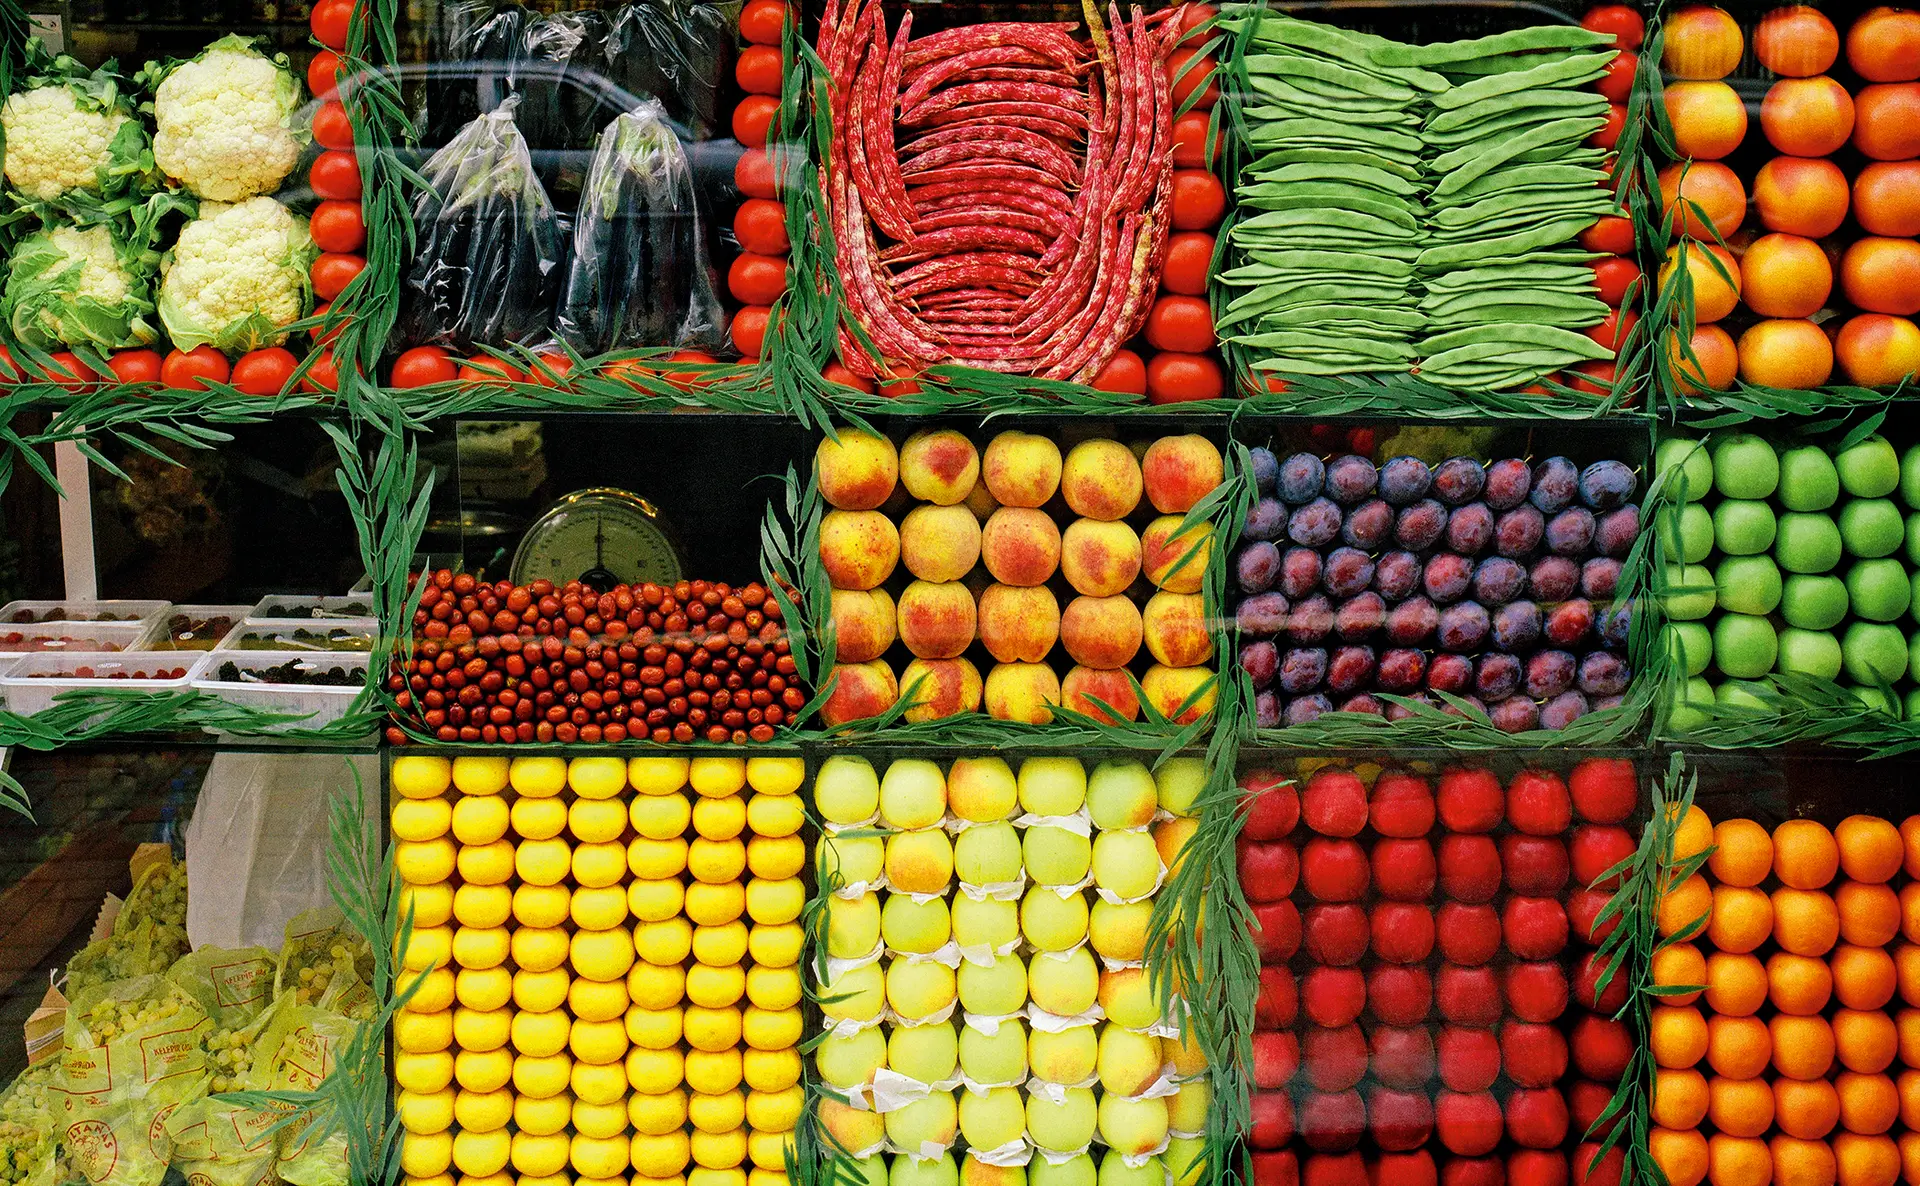 As frutas e os legumes nacionais já chegam a 142 países